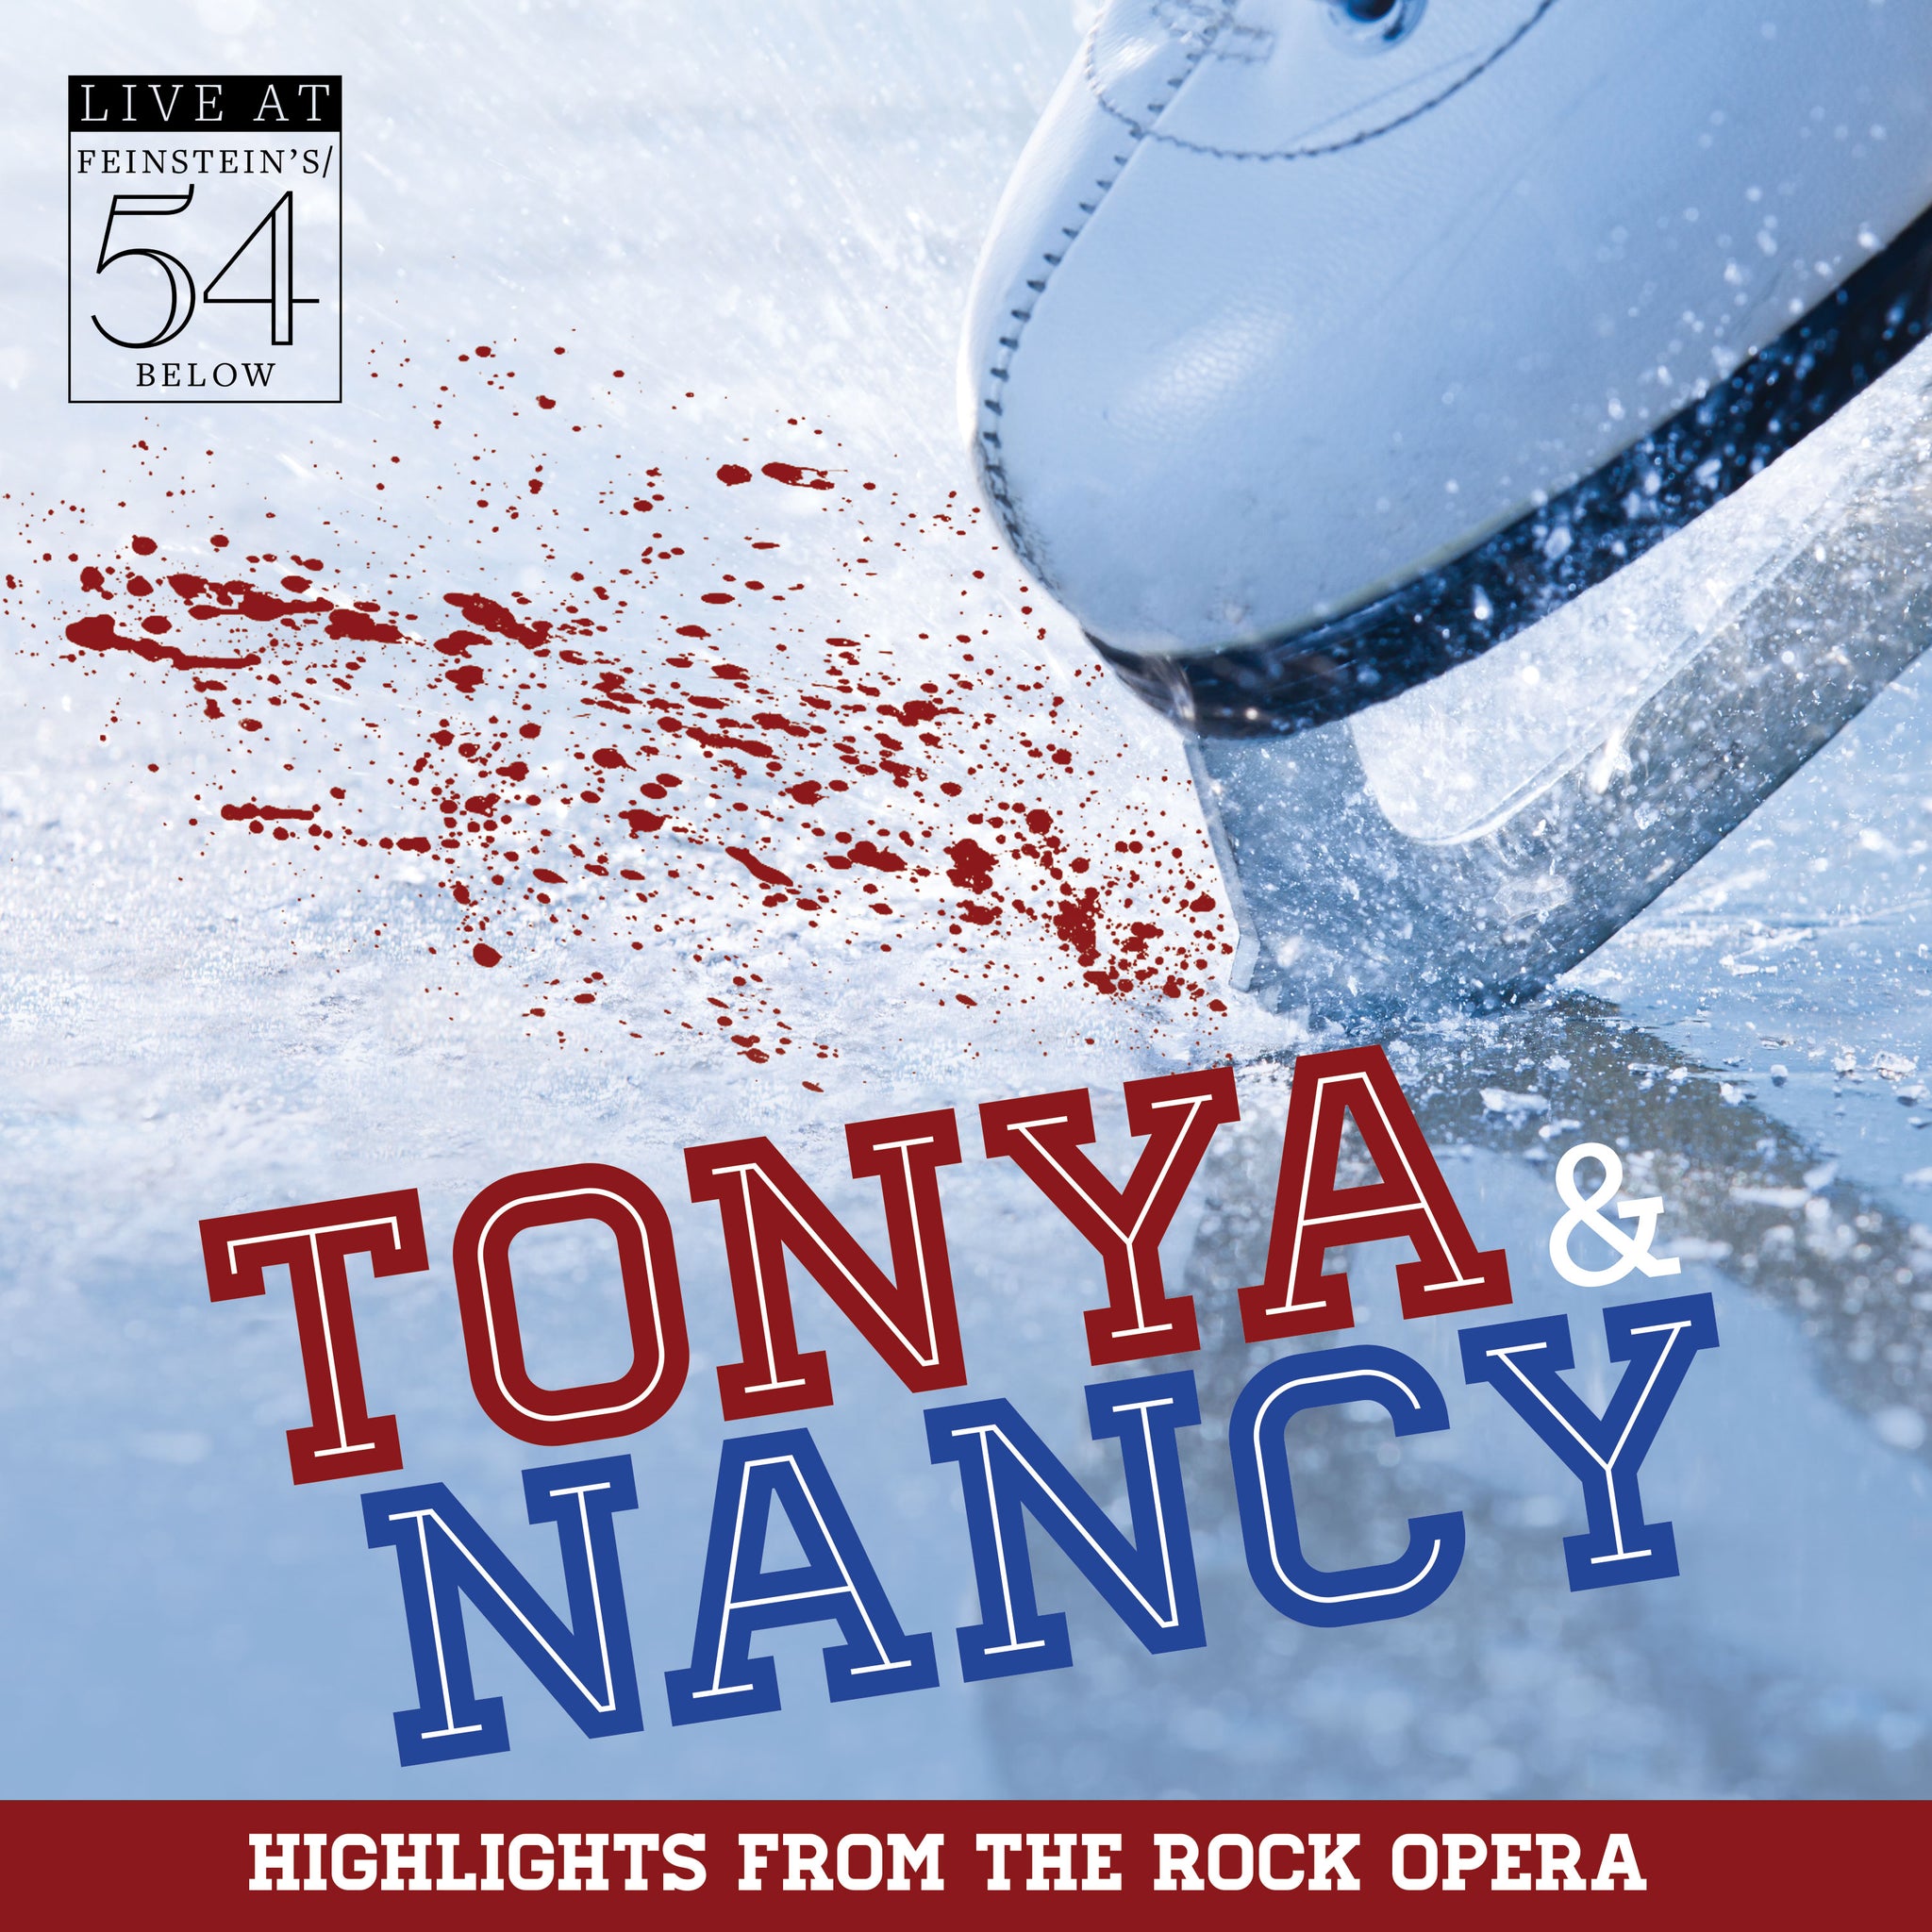 Tonya & Nancy (Highlights from the Rock Opera): Live at Feinstein's / 54 Below [CD]